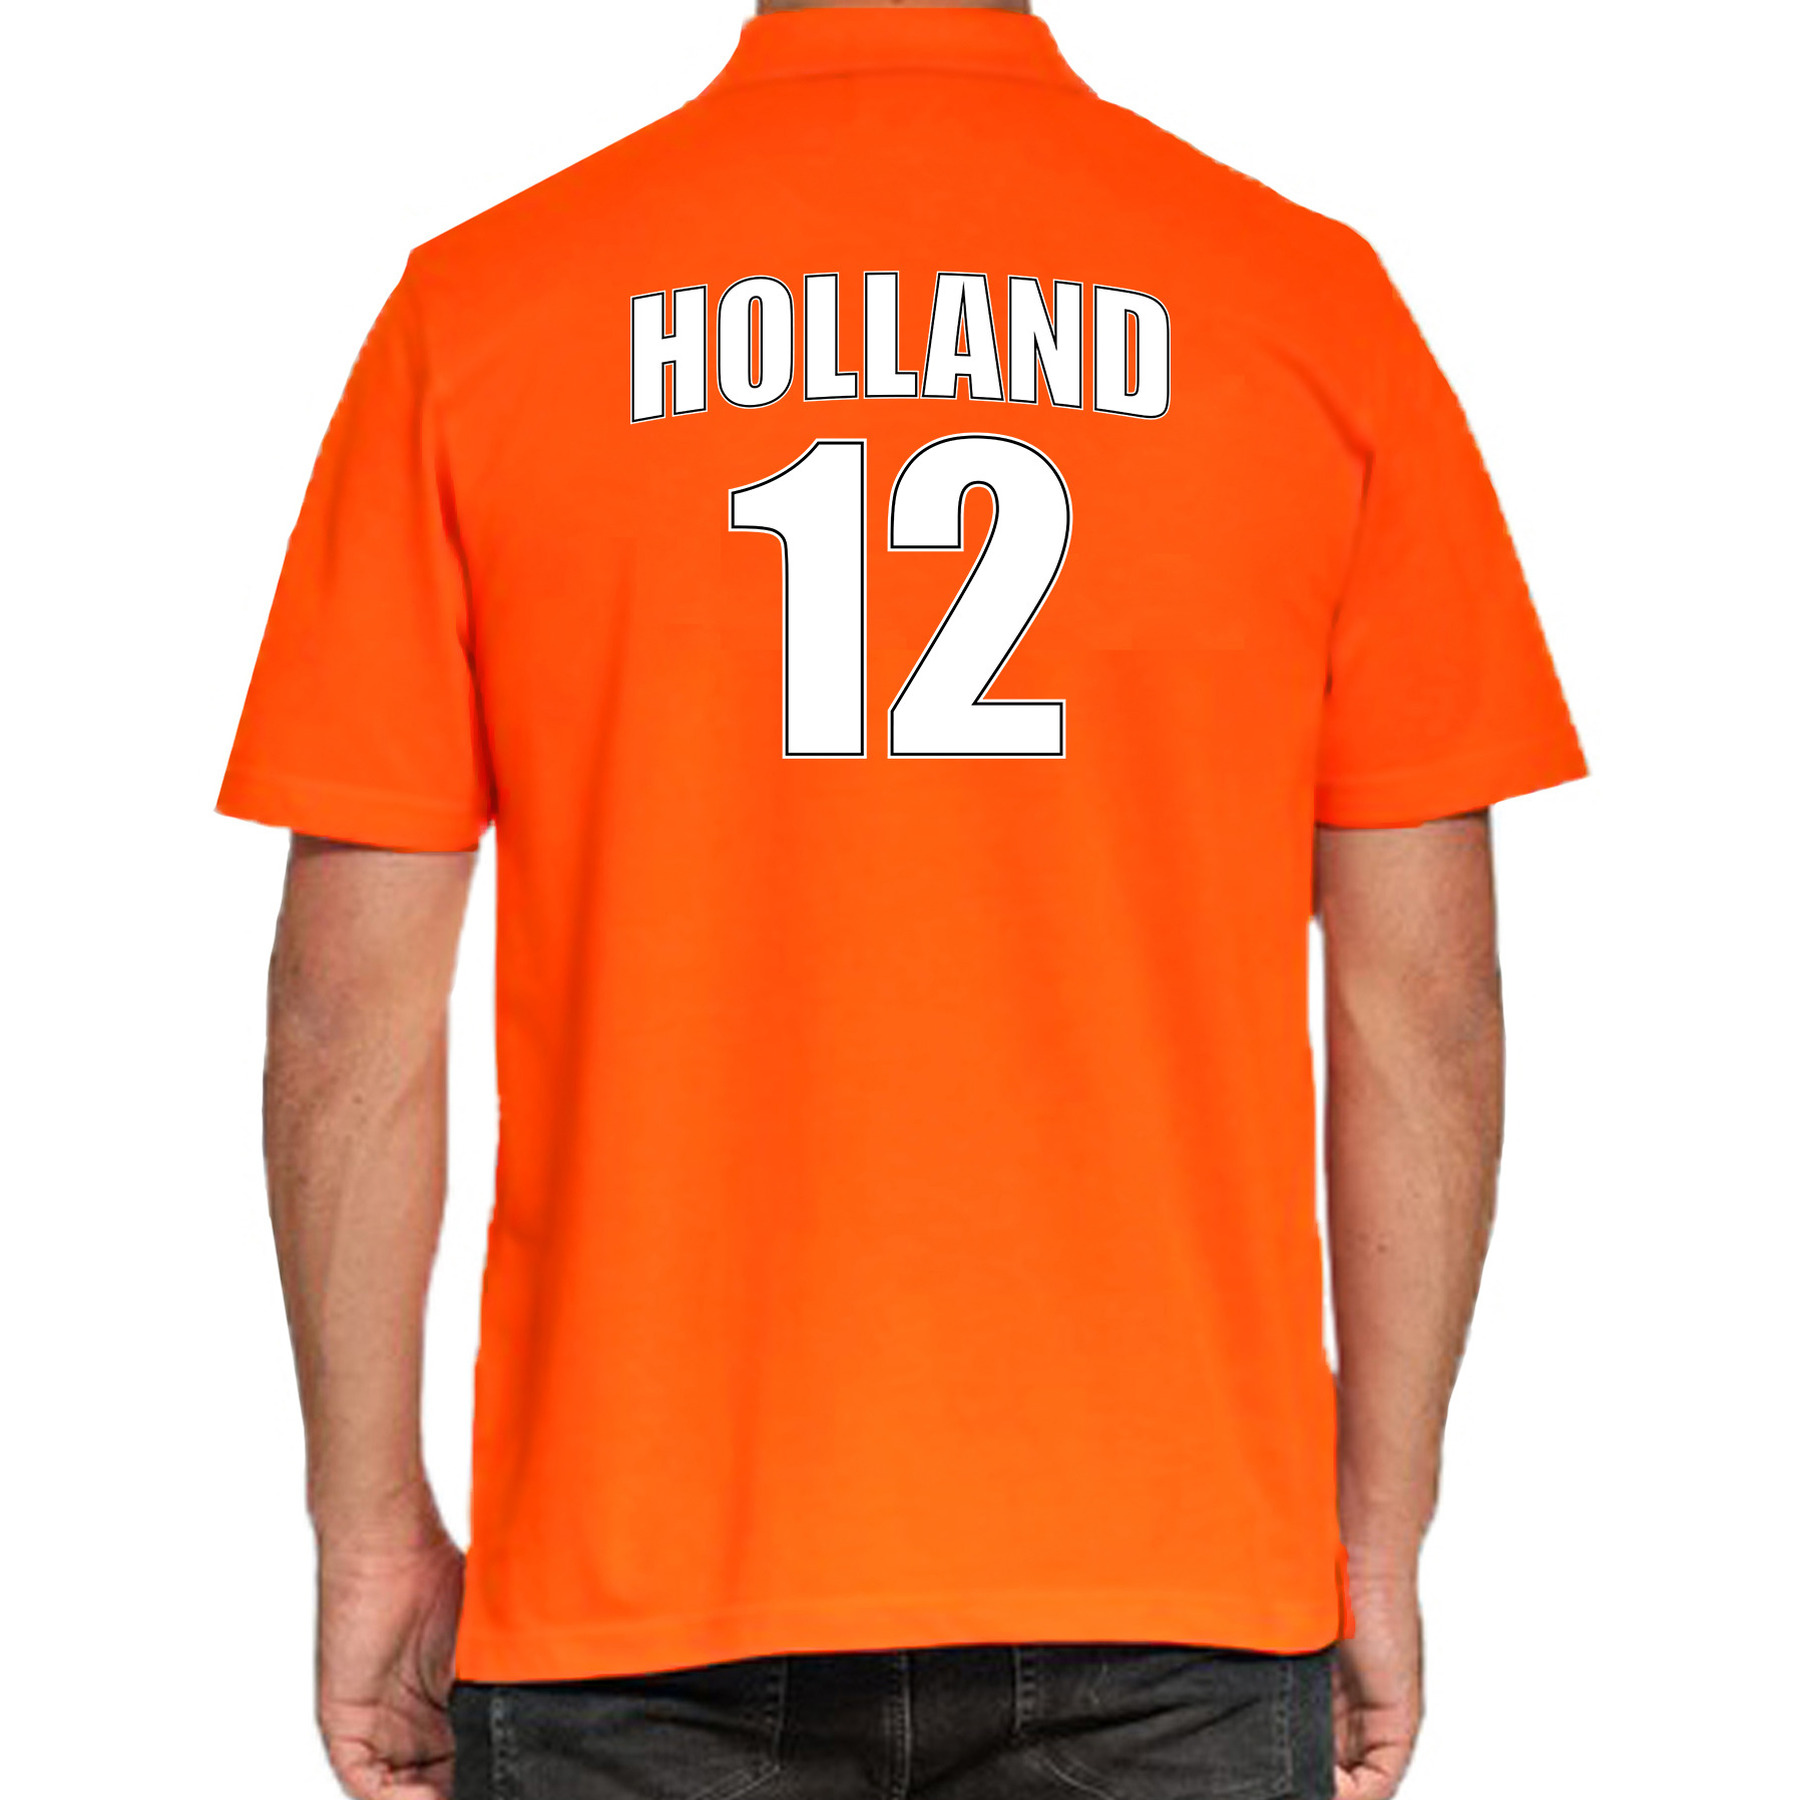 Oranje supporter poloshirt met rugnummer 12 - Holland - Nederland fan shirt voor heren